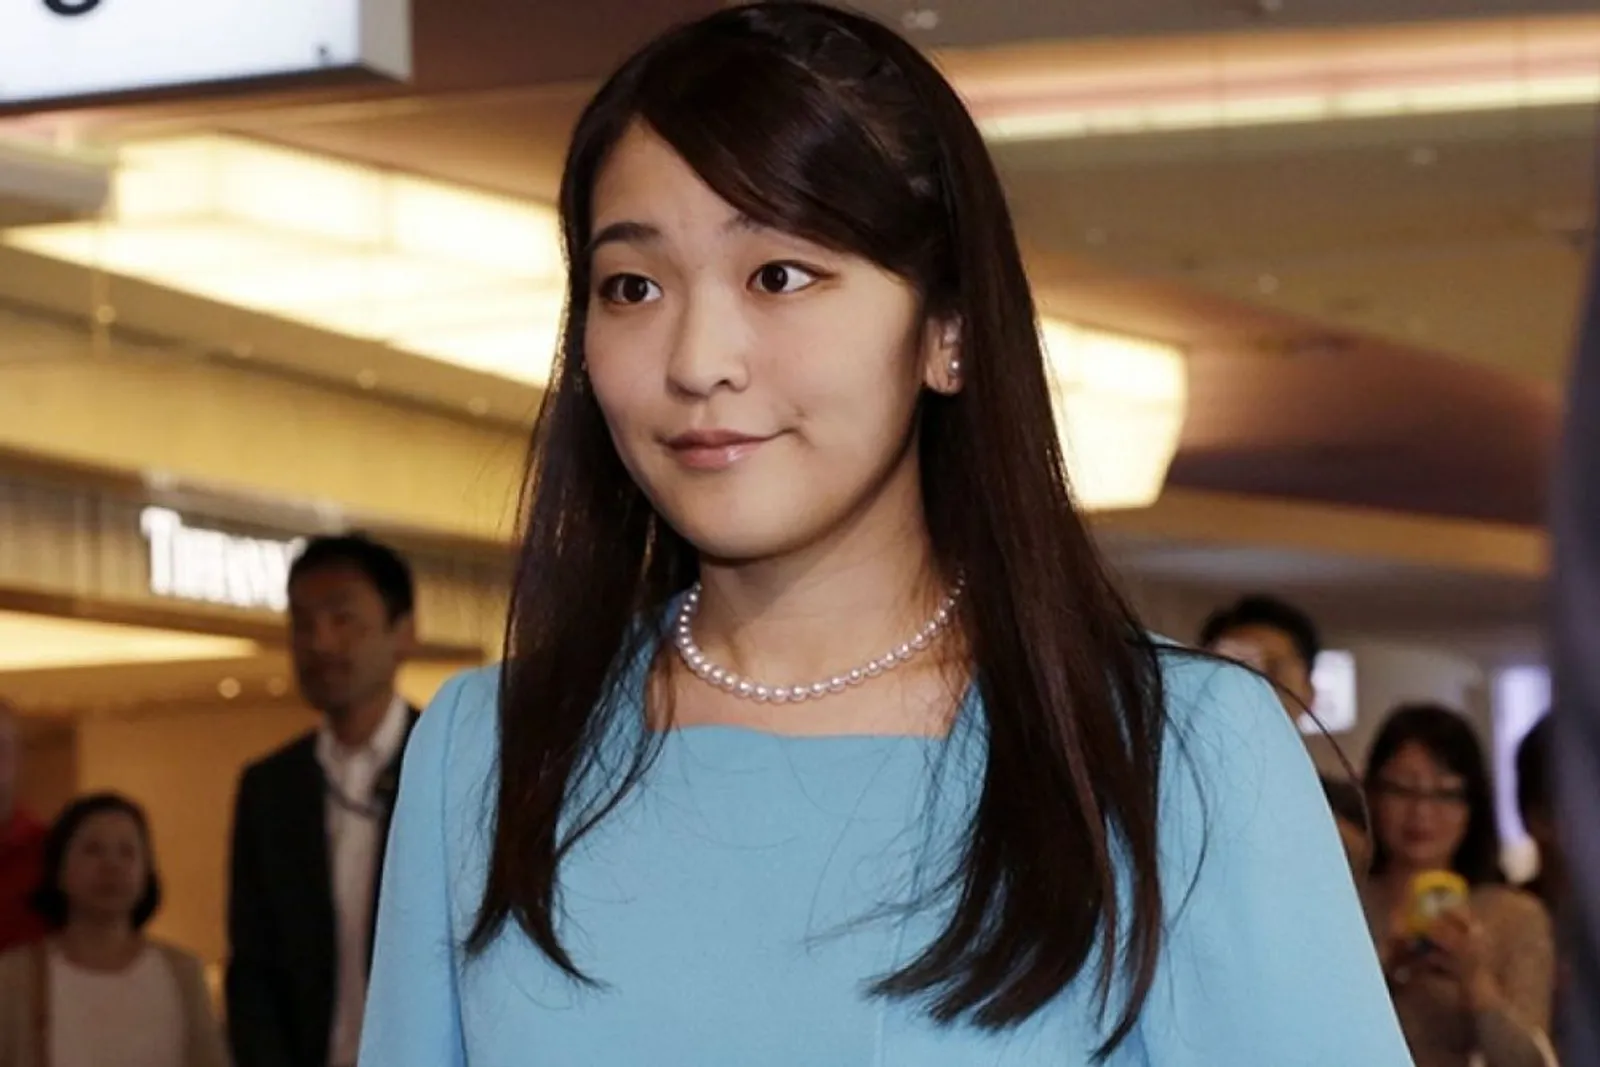 7 Pesona Putri Kekaisaran Jepang yang Akan Menikah Dengan Rakyat Biasa